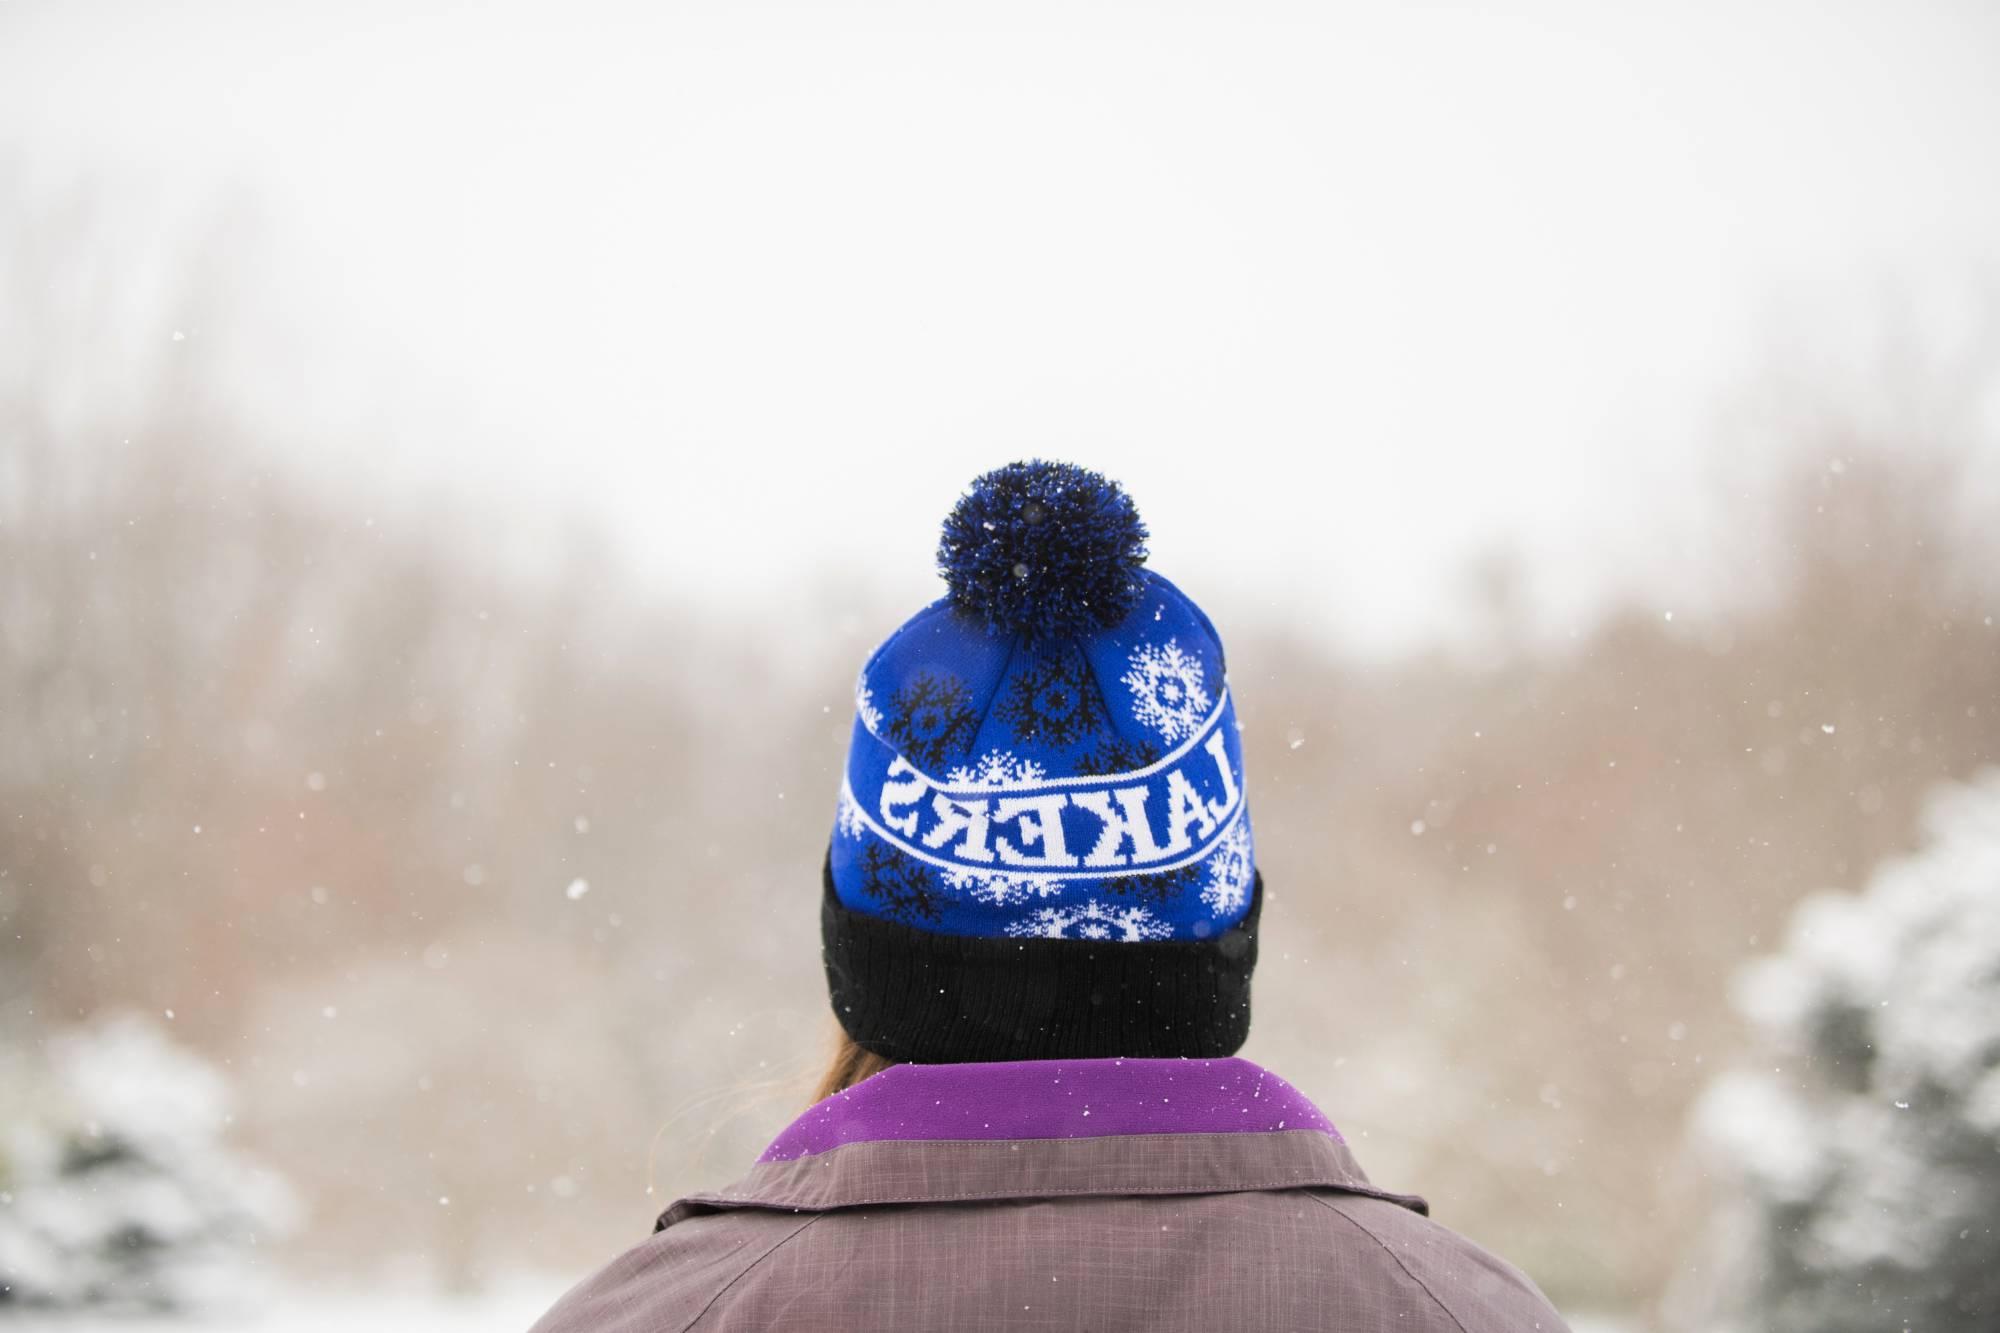 GVSU Student snowshoeing with a GVSU Lakers winter hat on head